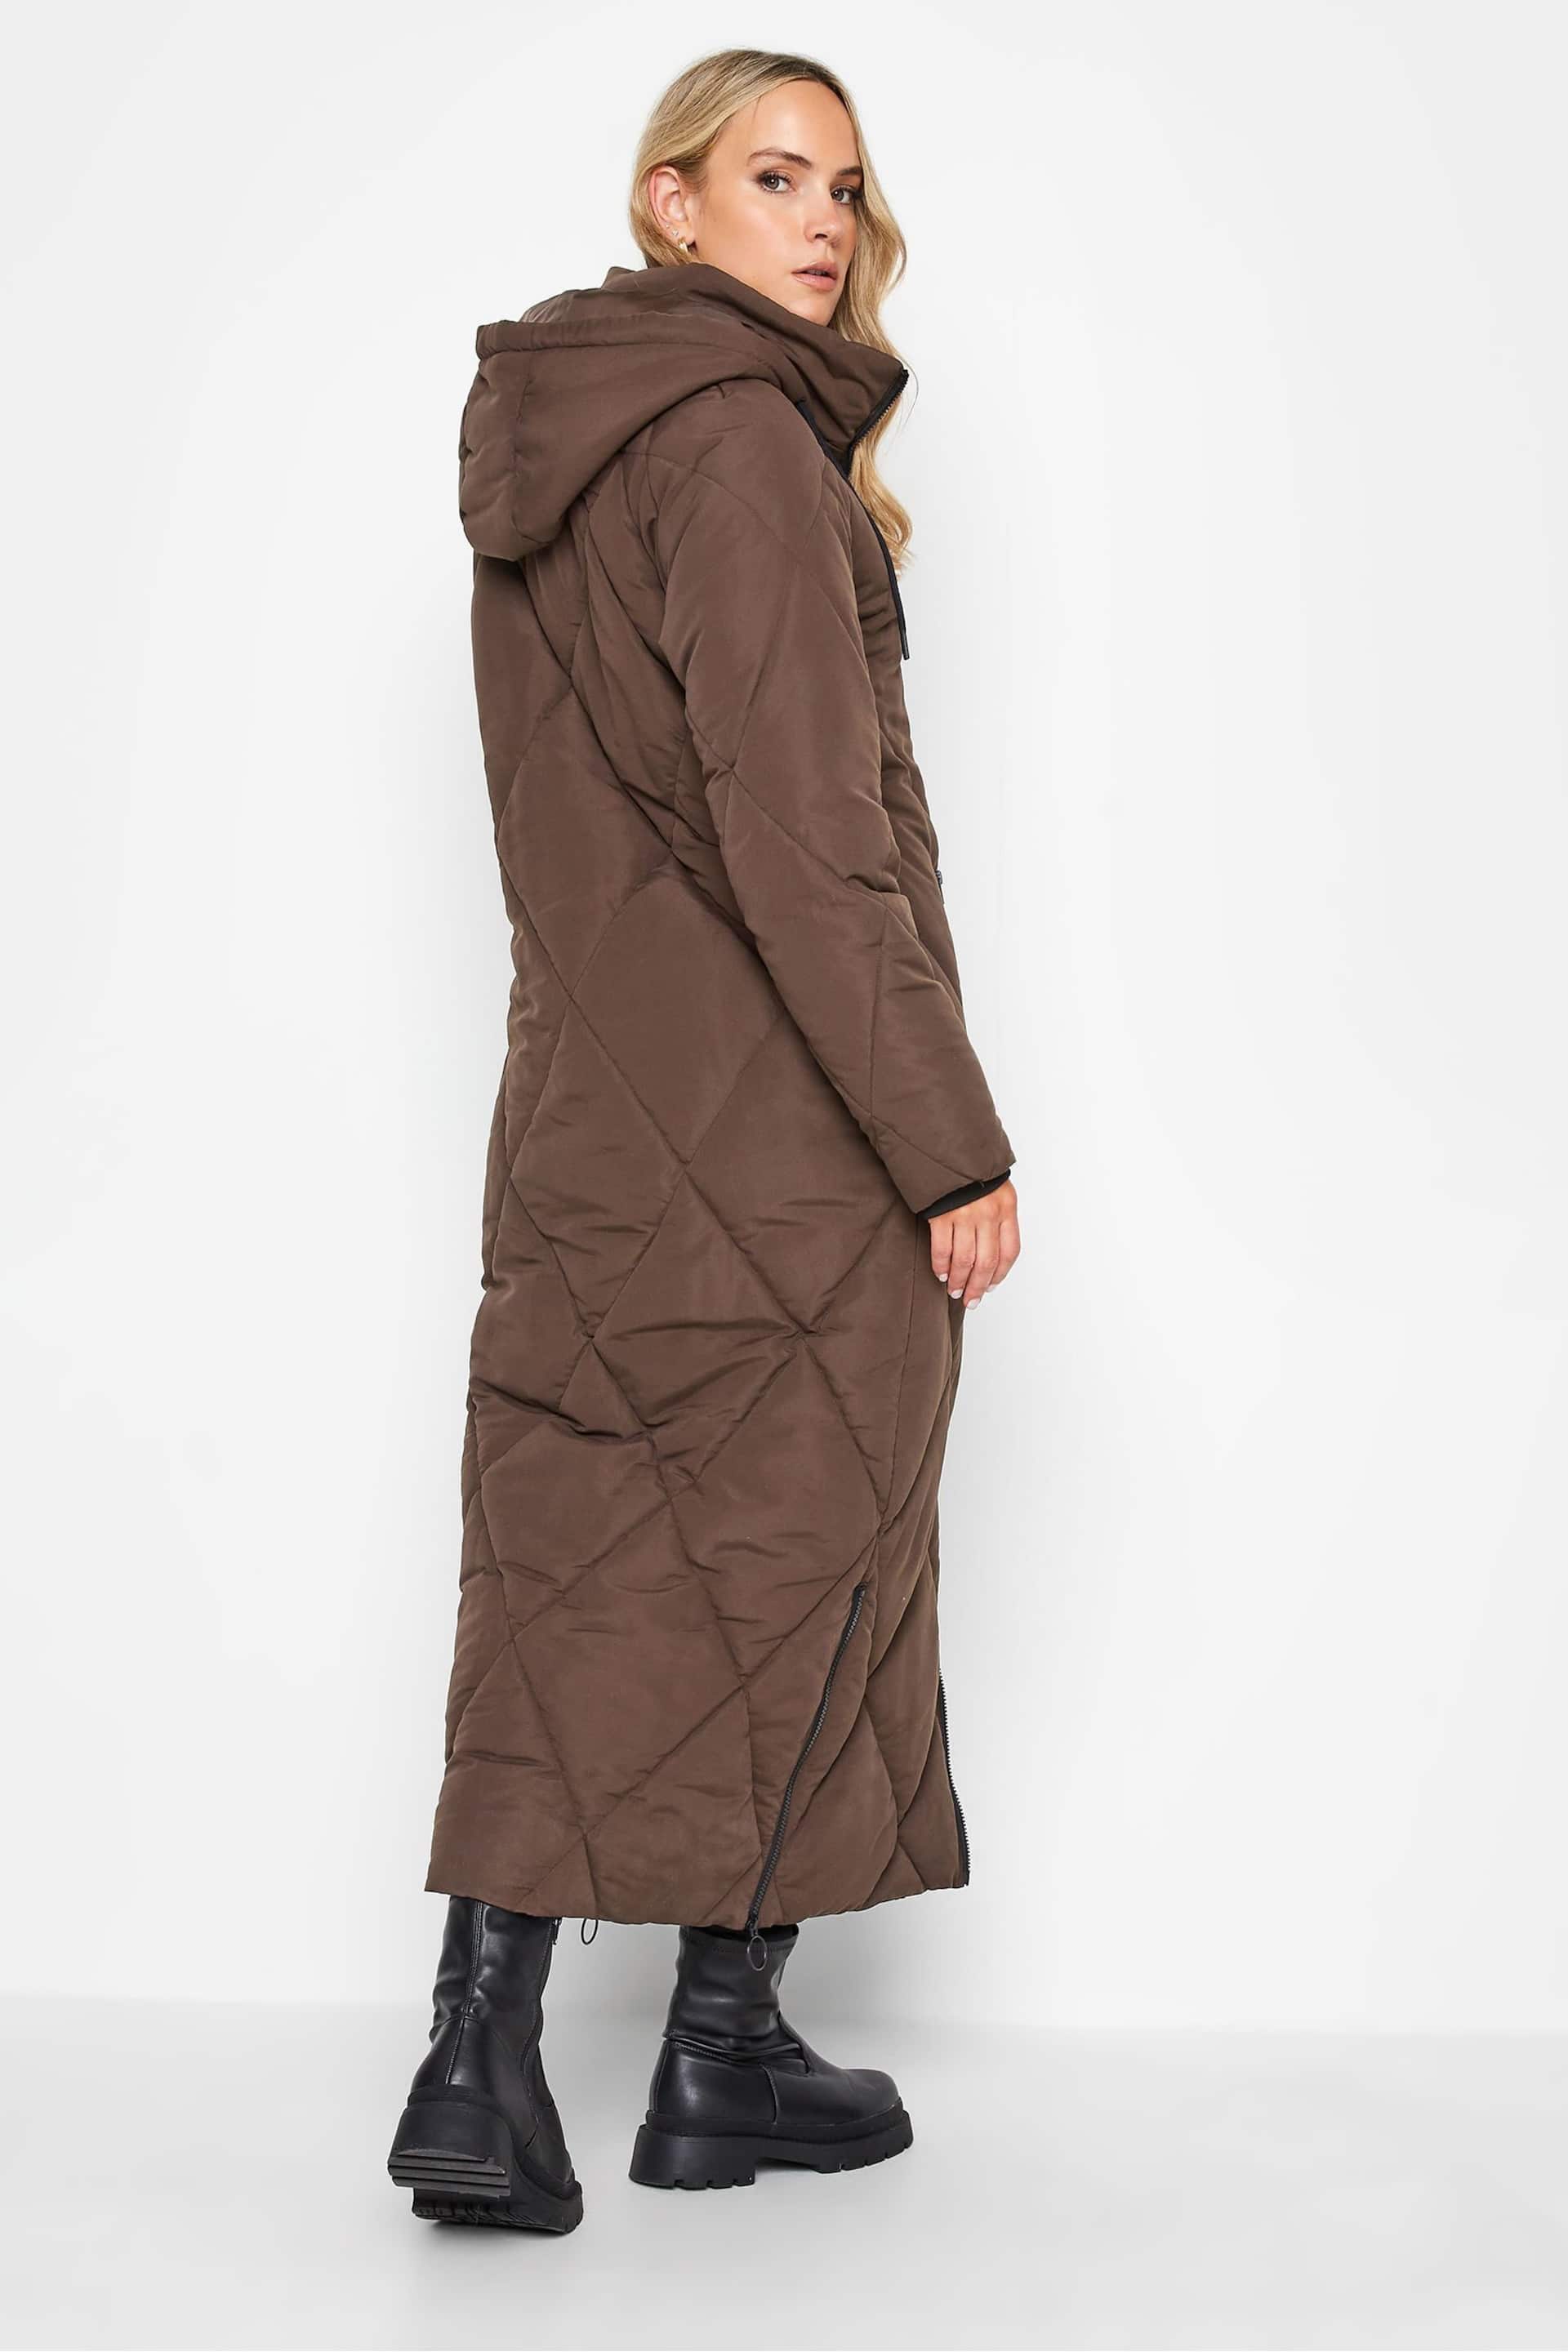 Long Tall Sally Brown Diamond Puffer Coat - Image 2 of 5